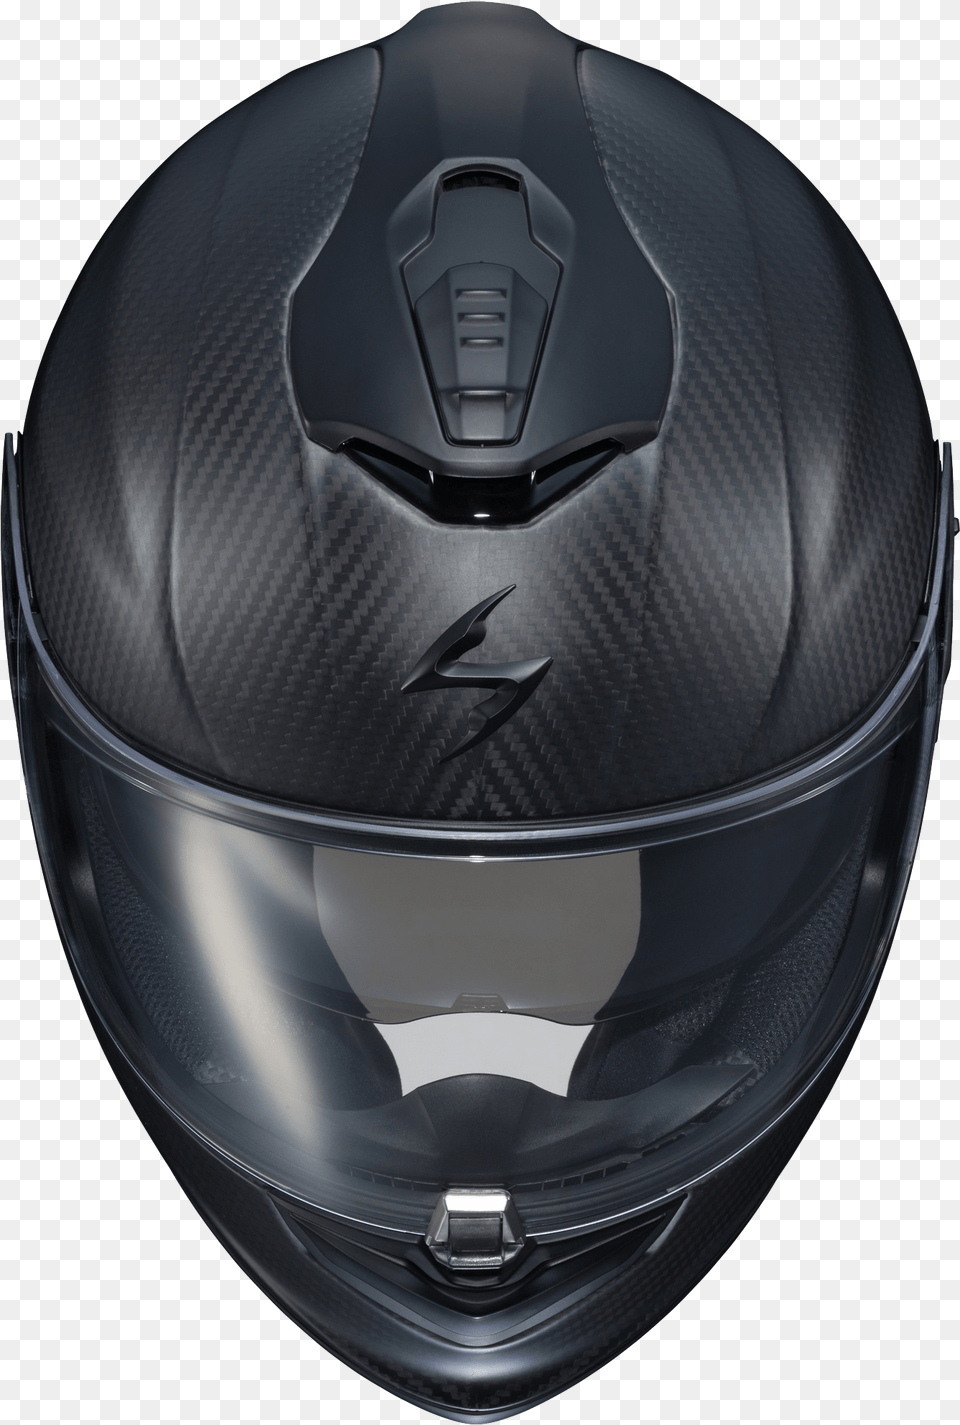 Scorpion Exo St1400 Carbon Helmet, Crash Helmet, Clothing, Hardhat, Car Free Png Download